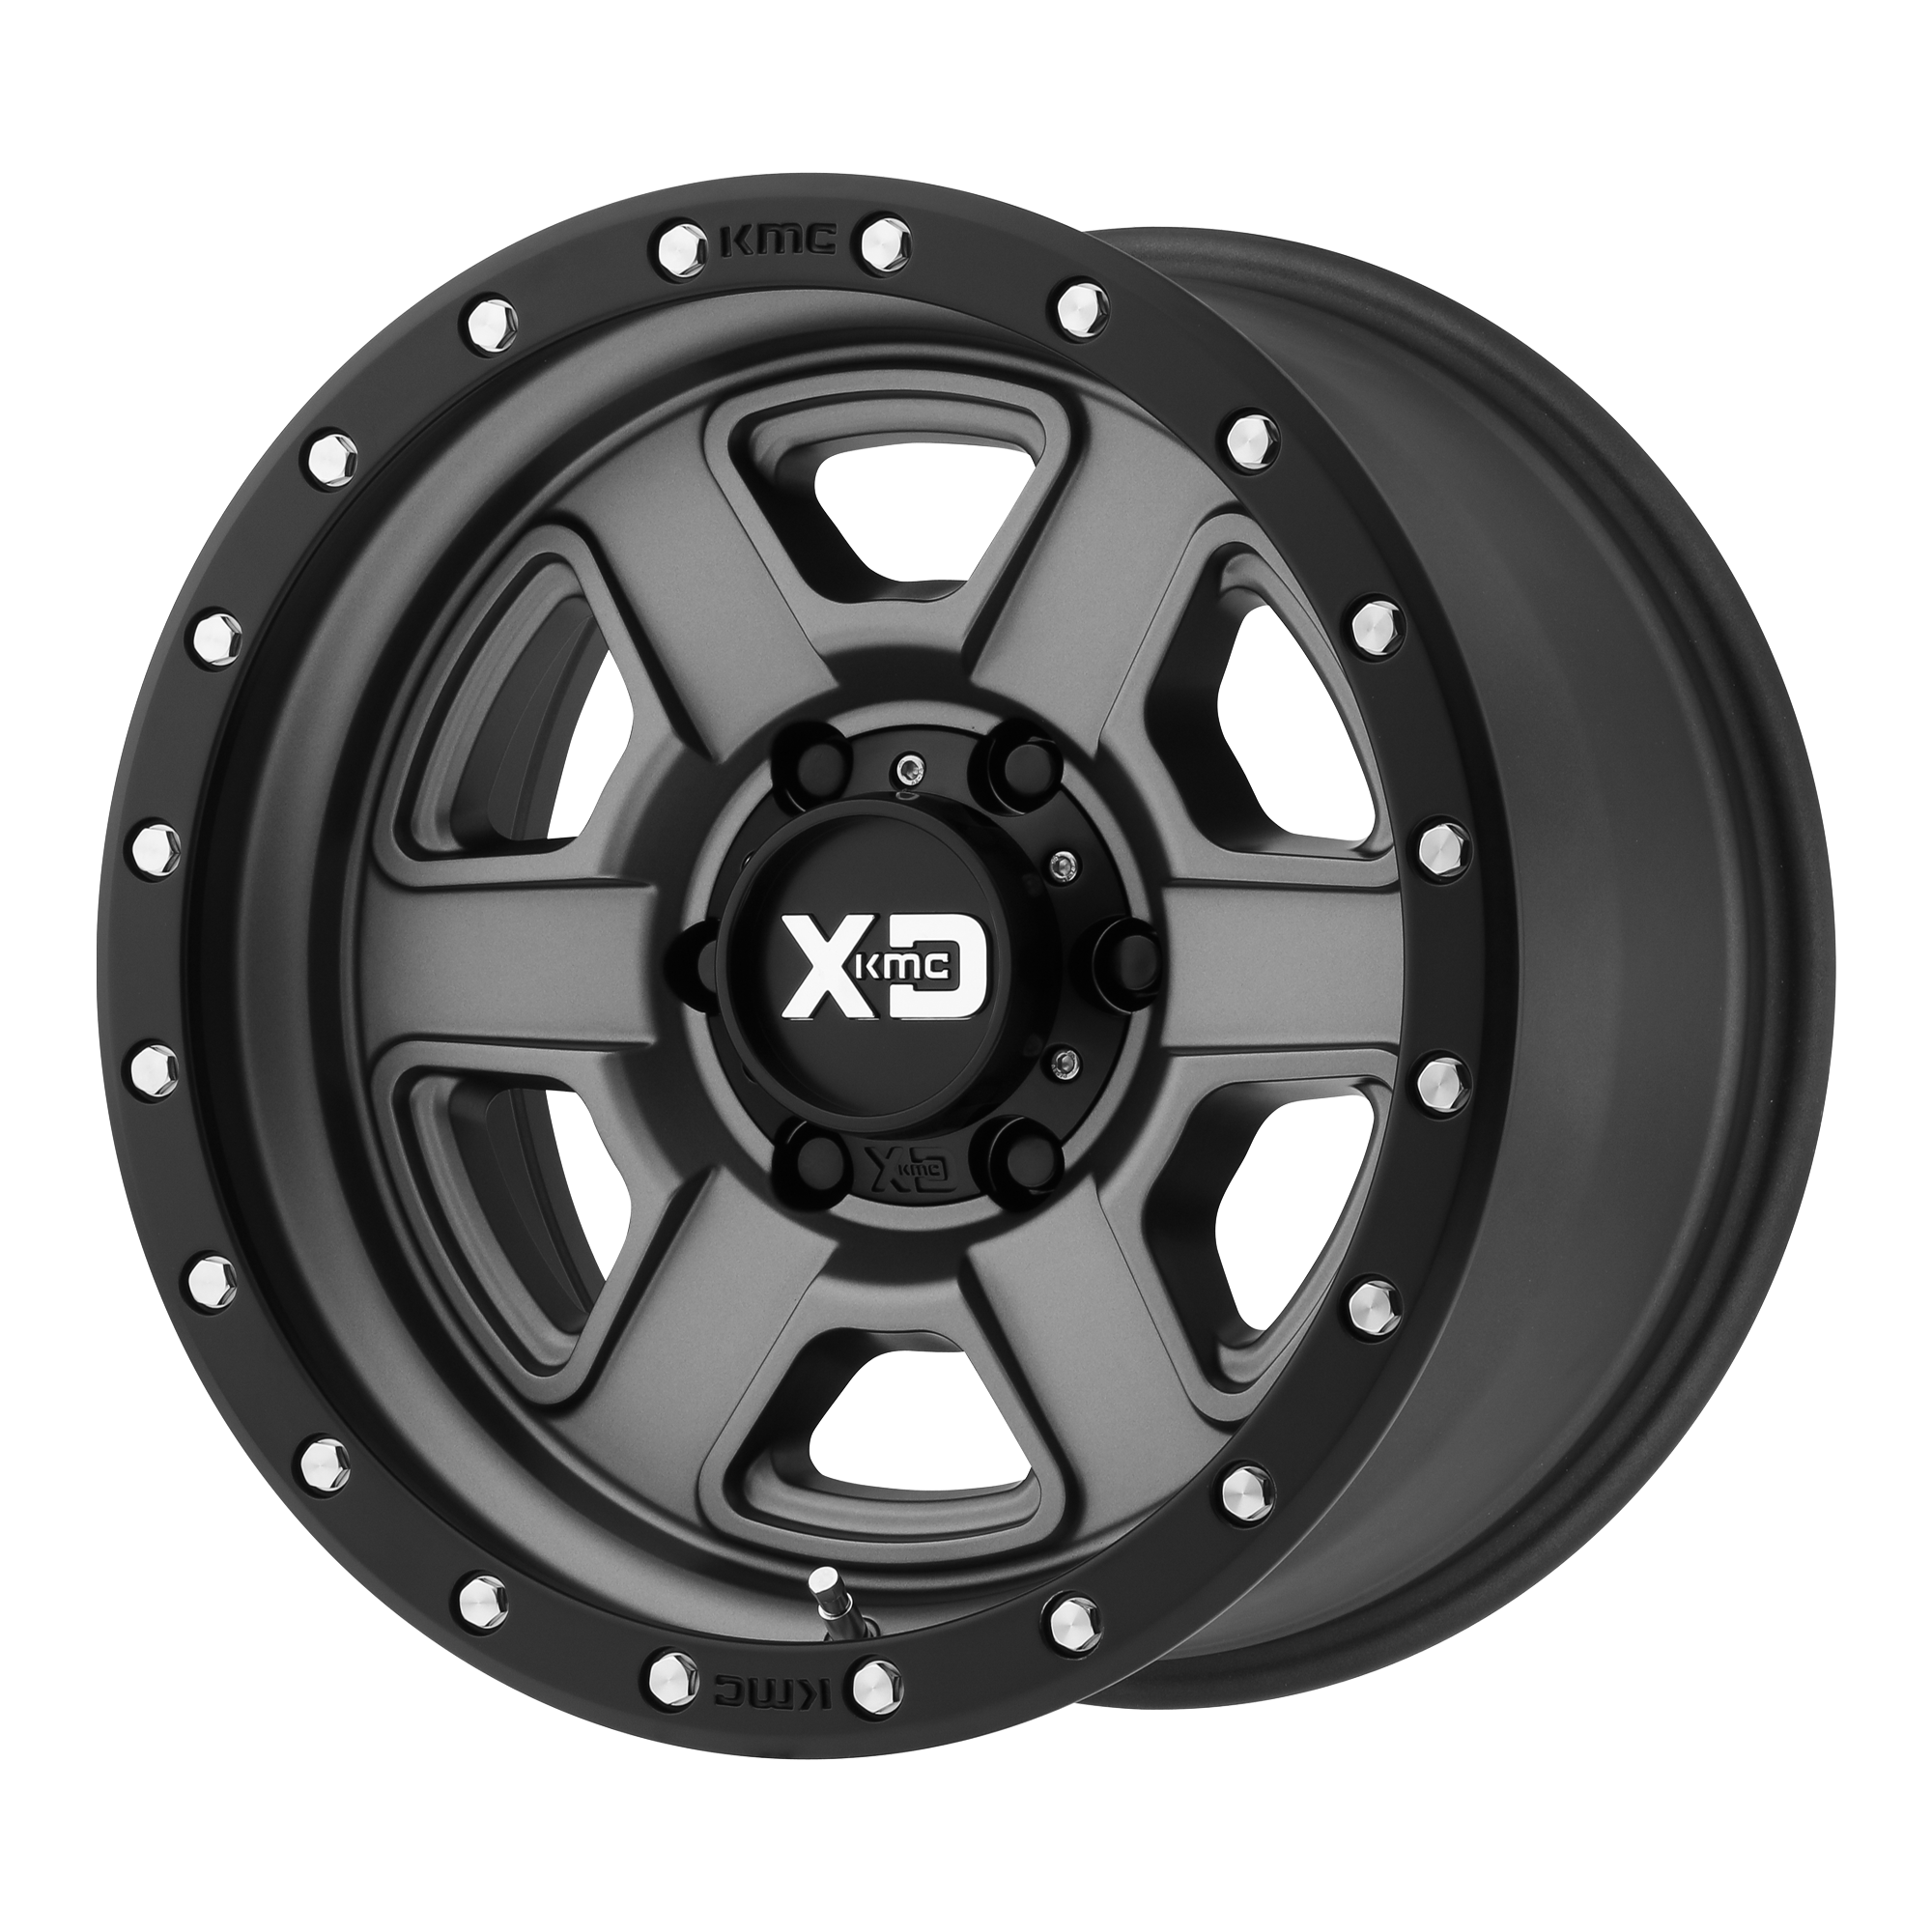 Xd колеса. Колесный диск XD Series xd301 9x17/5x139.7 d108 et18 Satin Black. KMC XD Wheels. Колесный диск XD Series xd301 9x17/6x135 d87.1 et-12 Satin Black. Колесный диск XD Series xd131 rg1 9x17/8x170 d125 et-12 Satin Black.